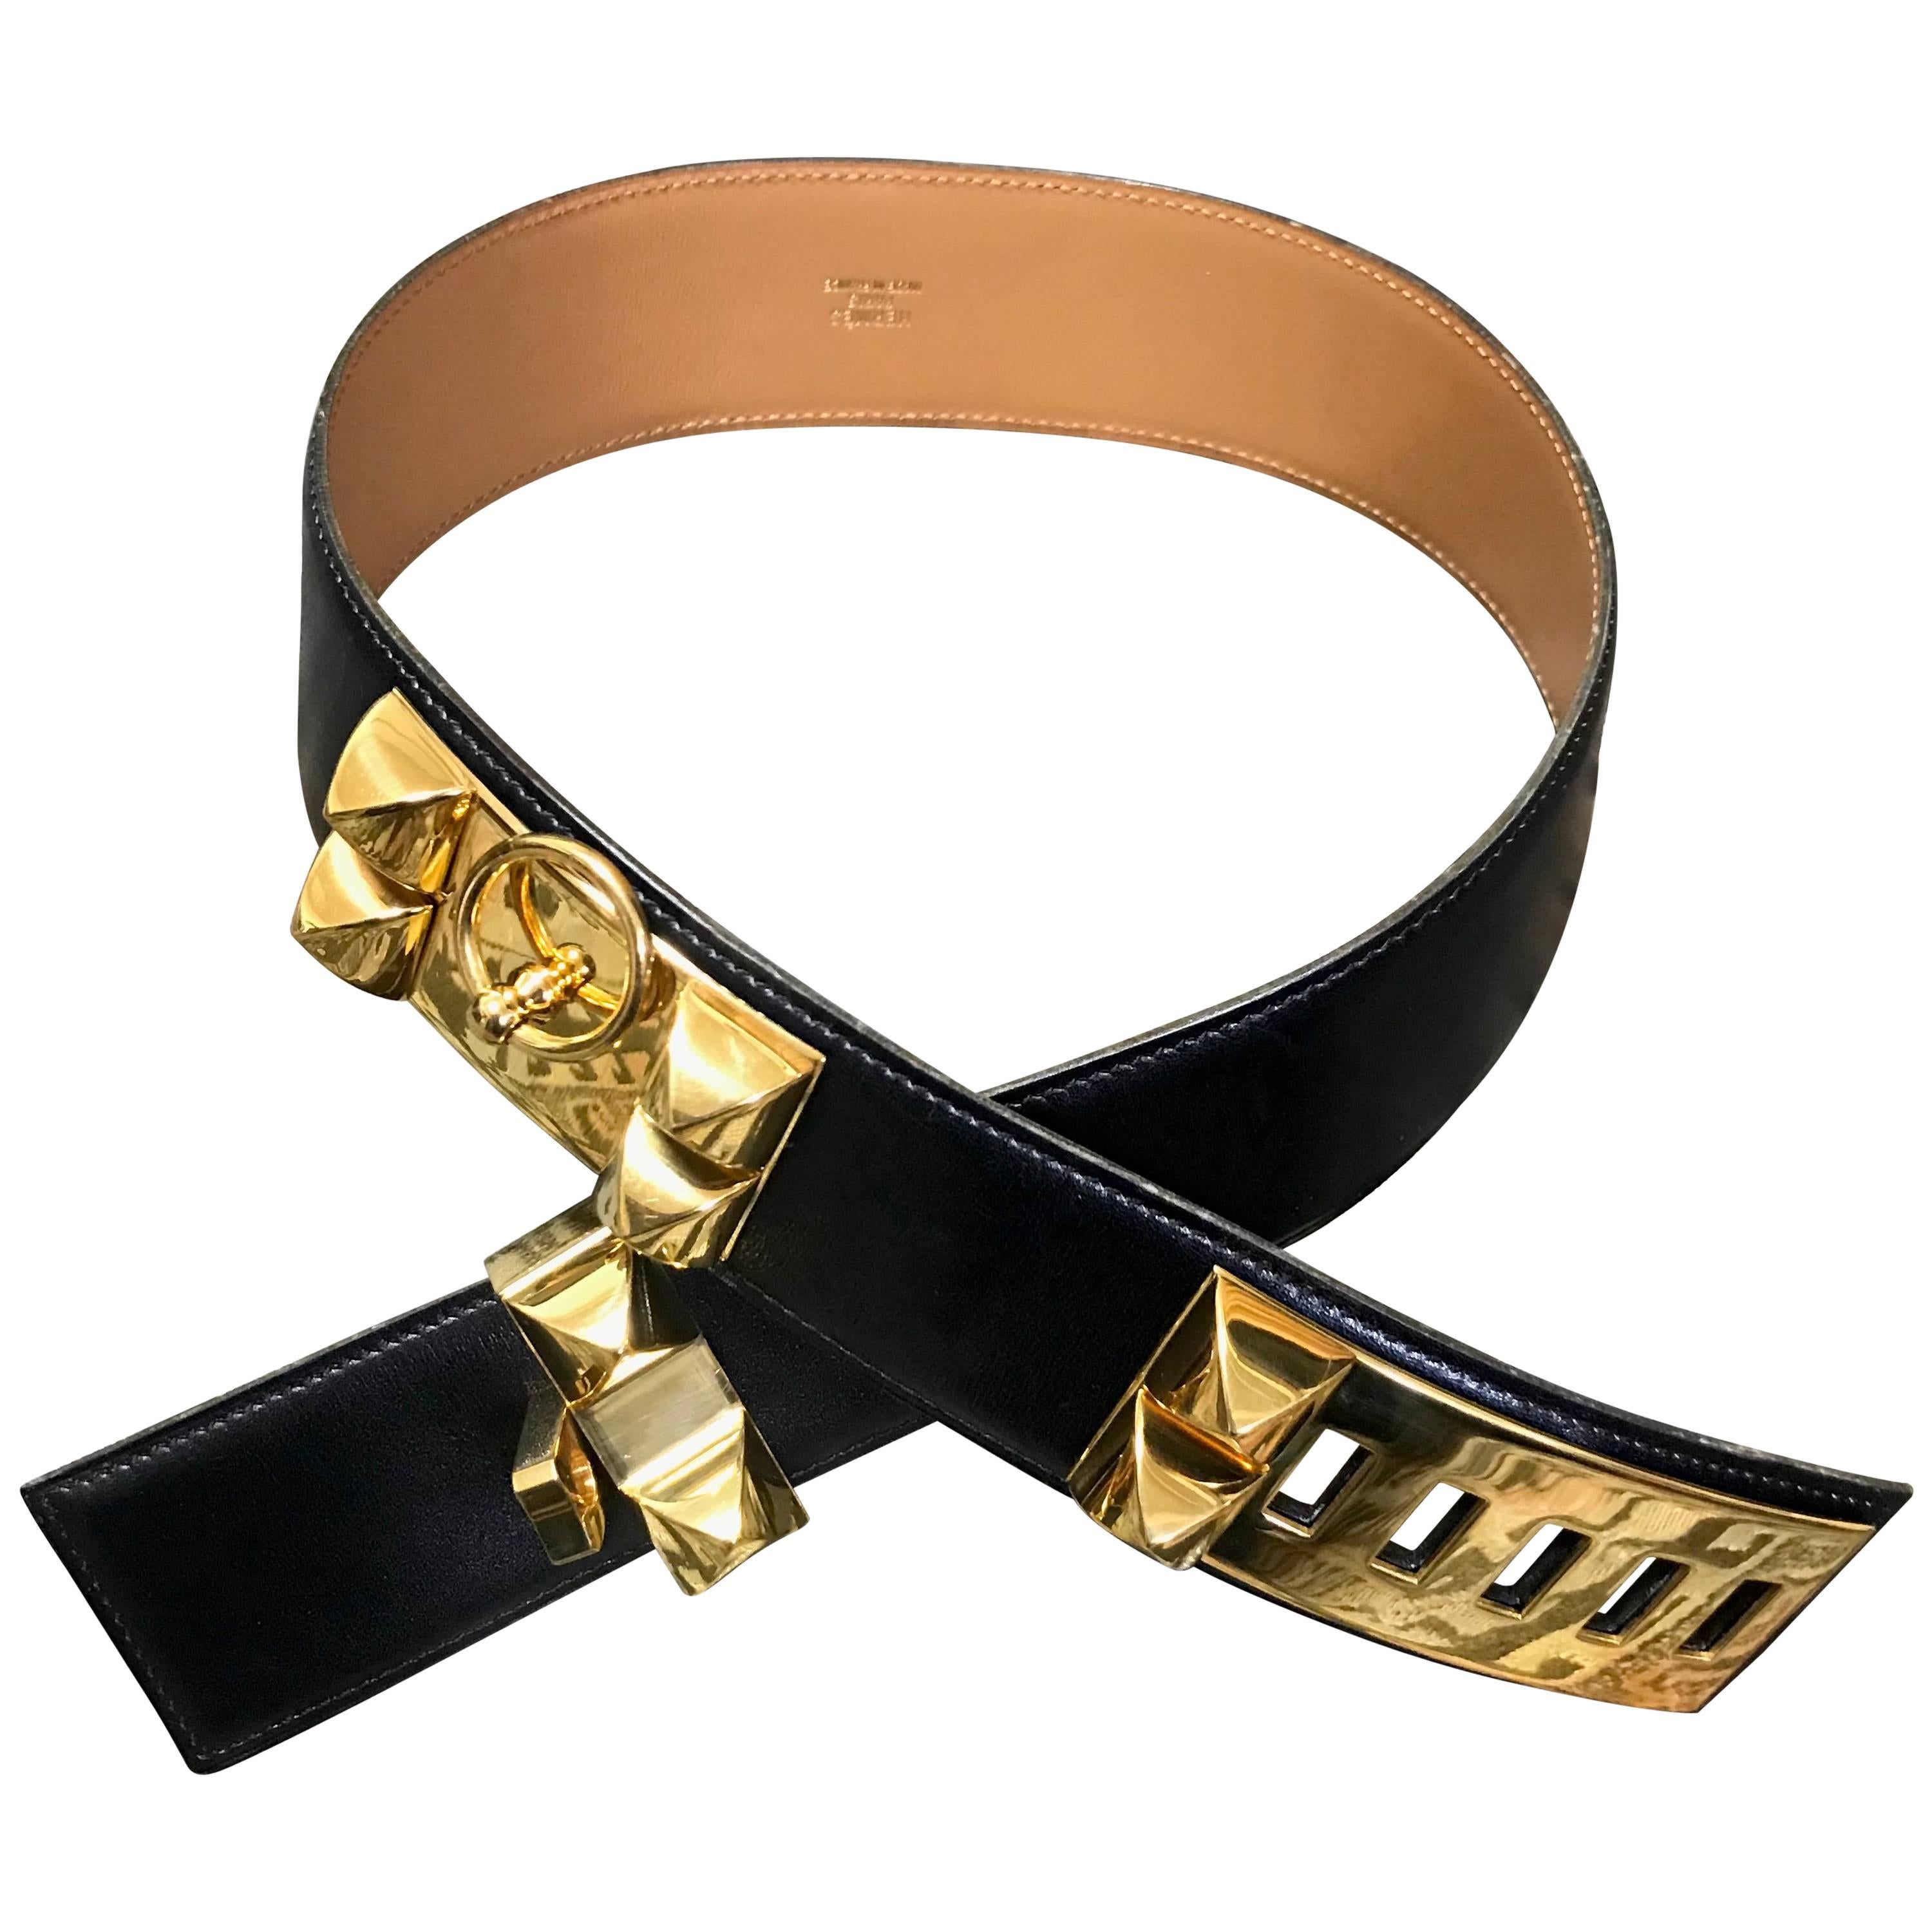 Hermes Collier de Chien Black Calfskin Medor belt with gold plated hardware 